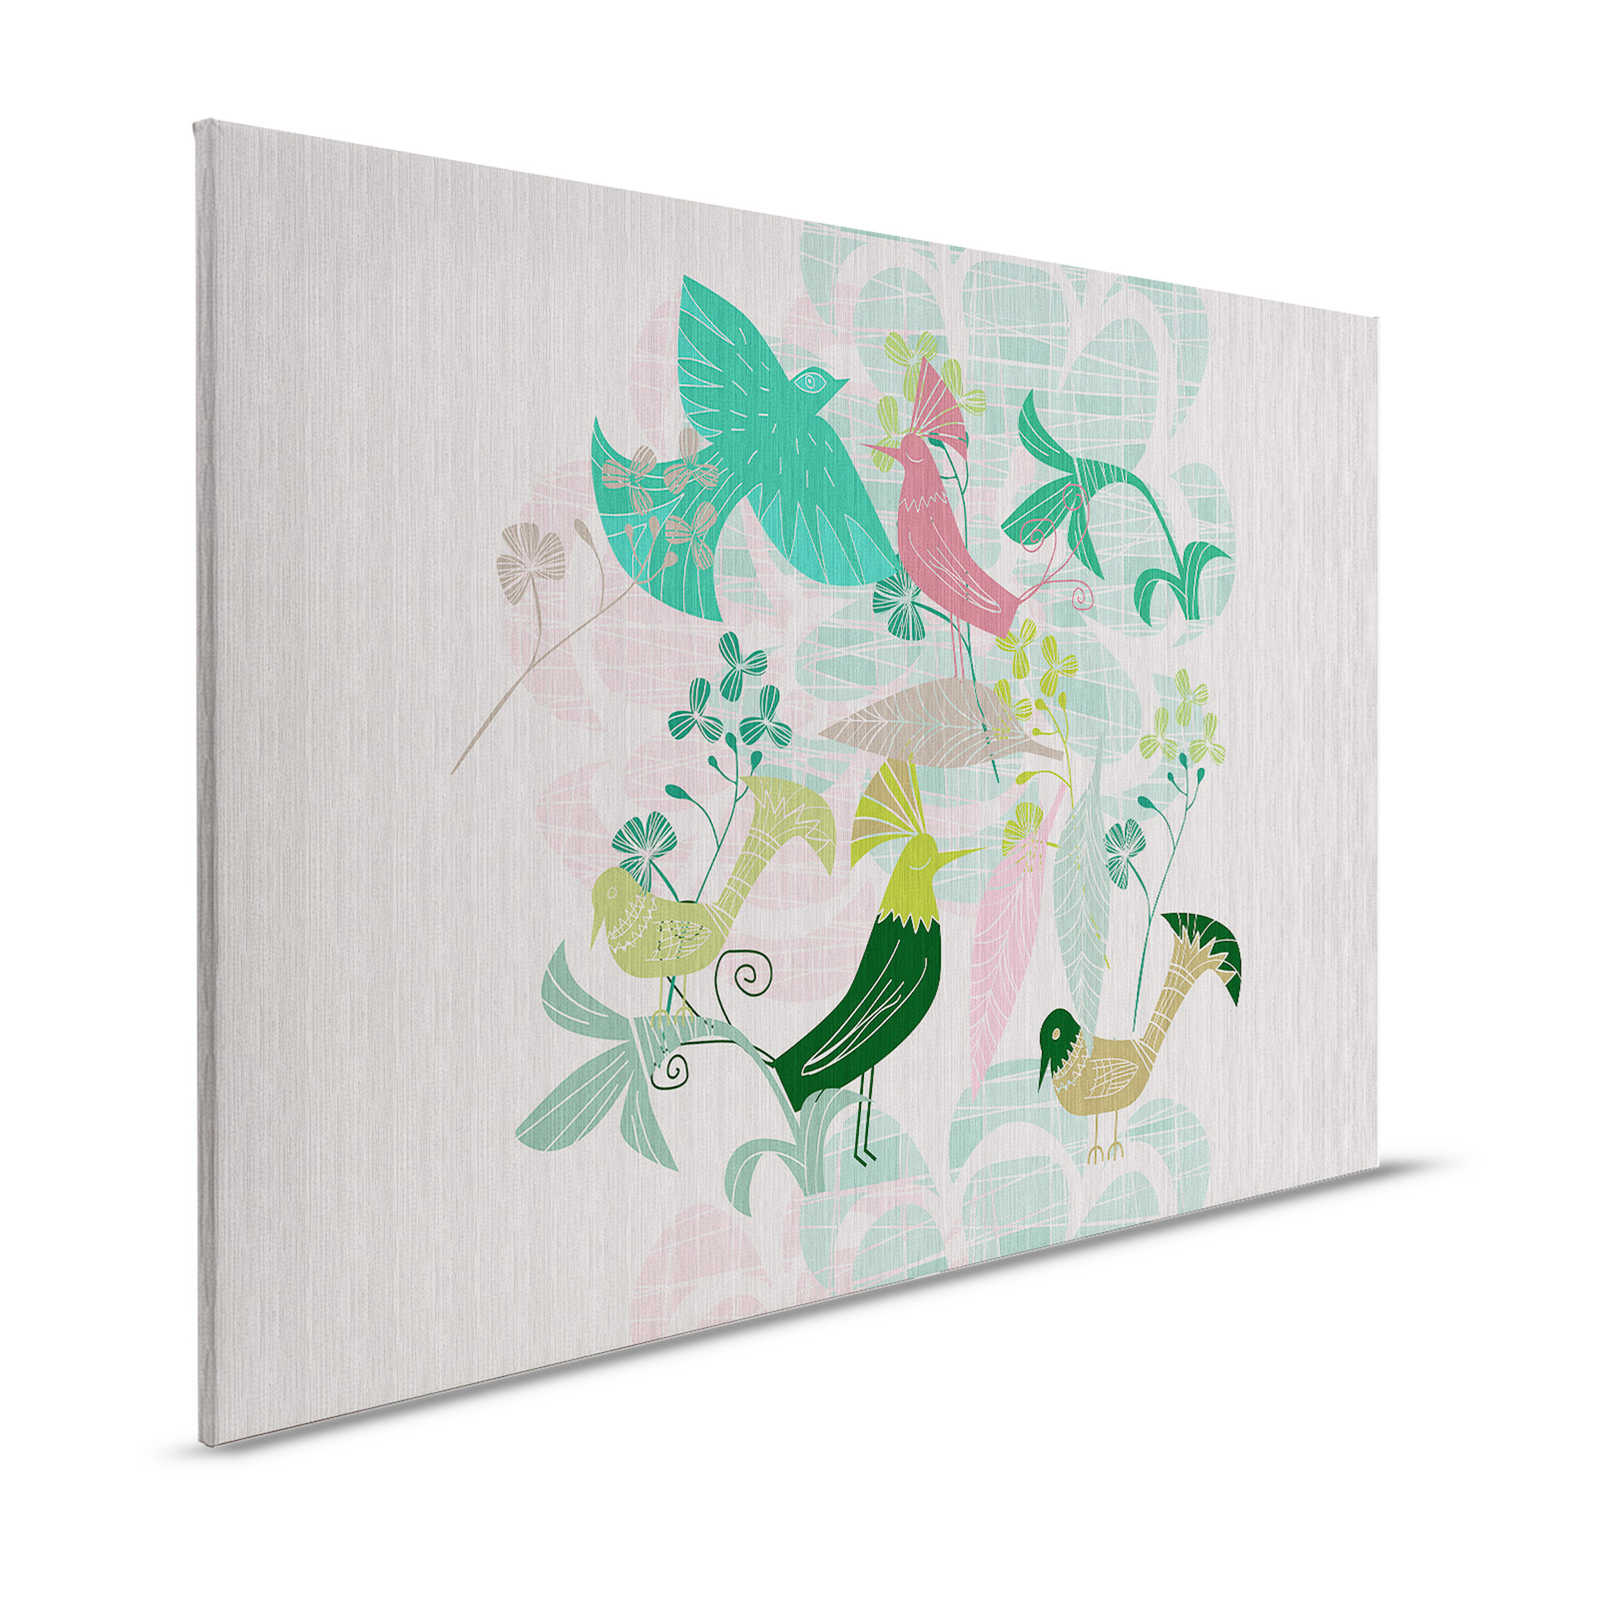 Birdland 3 - Canvas schilderij Groene & Roze Vogels Retro Stijl Patroon - 1,20 m x 0,80 m
